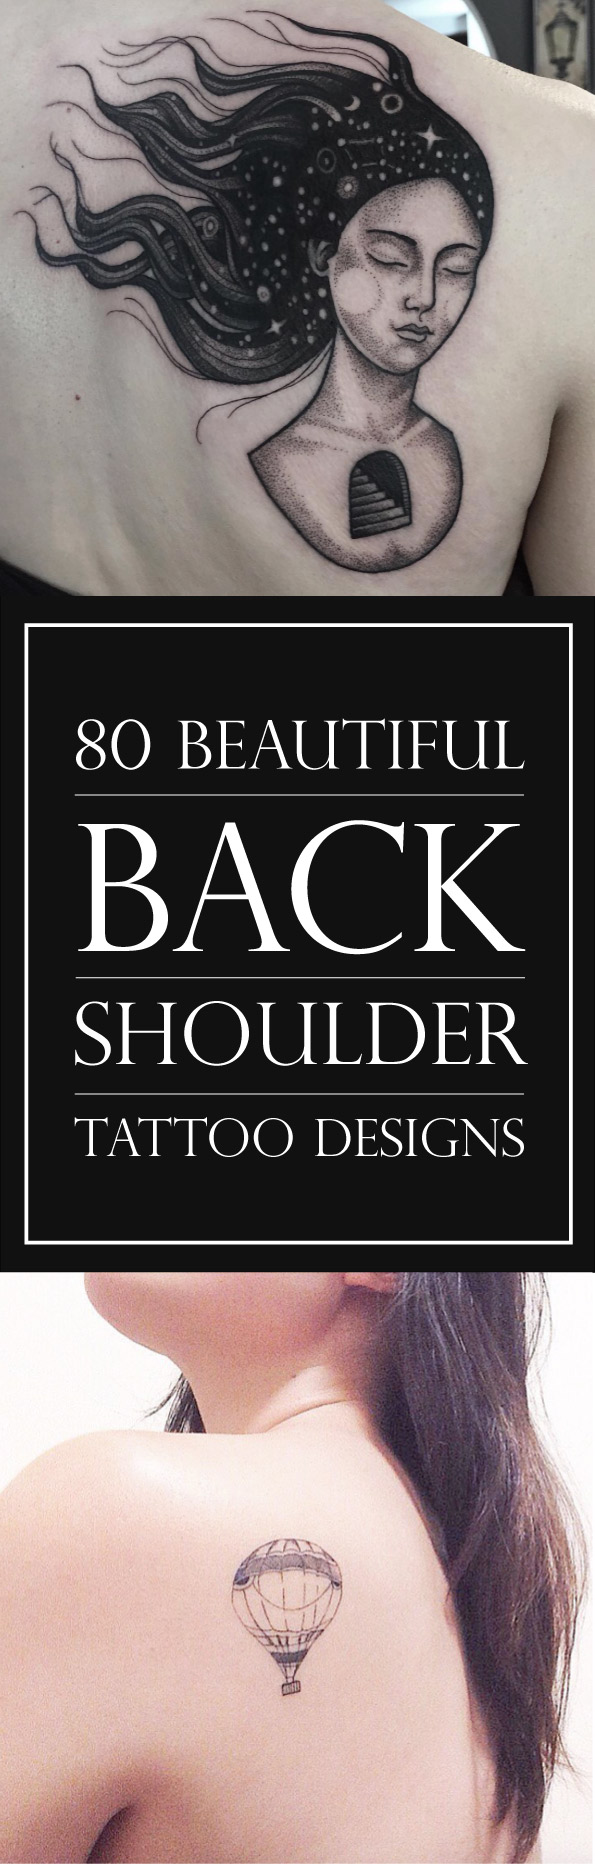 Beautiful Back Shoulder Tattoo Designs | TattooBlend